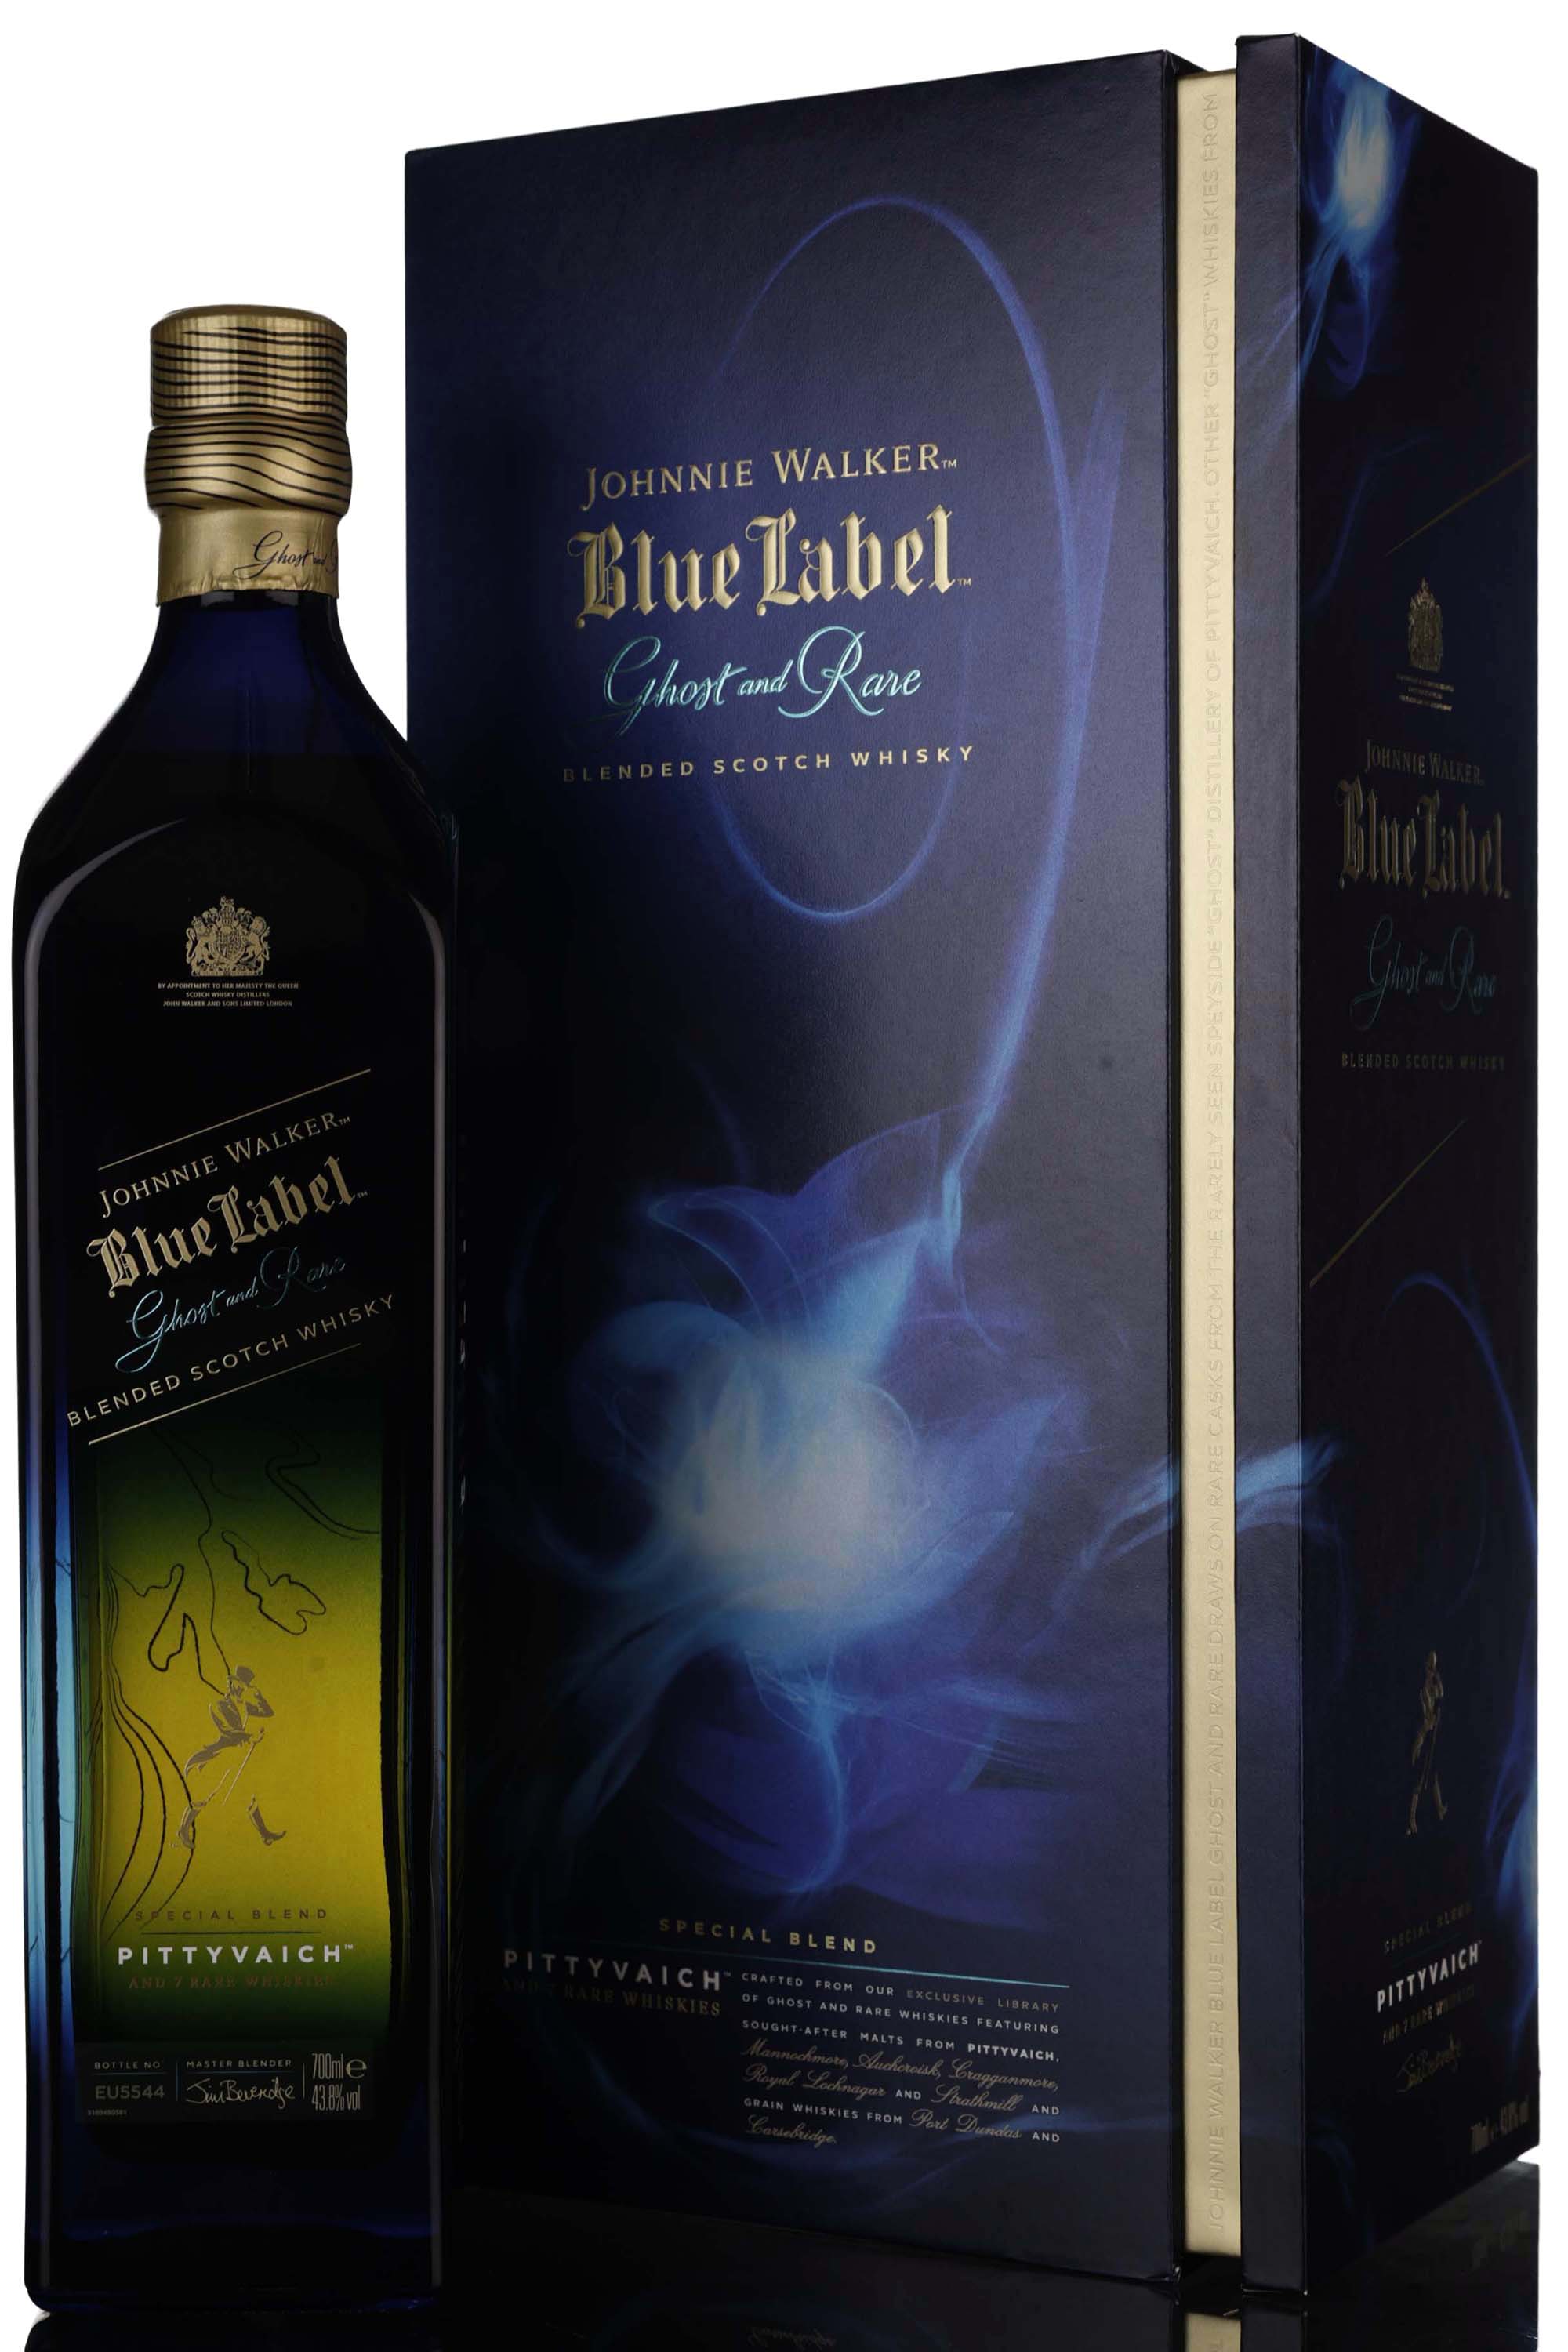 Johnnie Walker Blue Label - Ghost & Rare Pittyvaich - 2021 Release